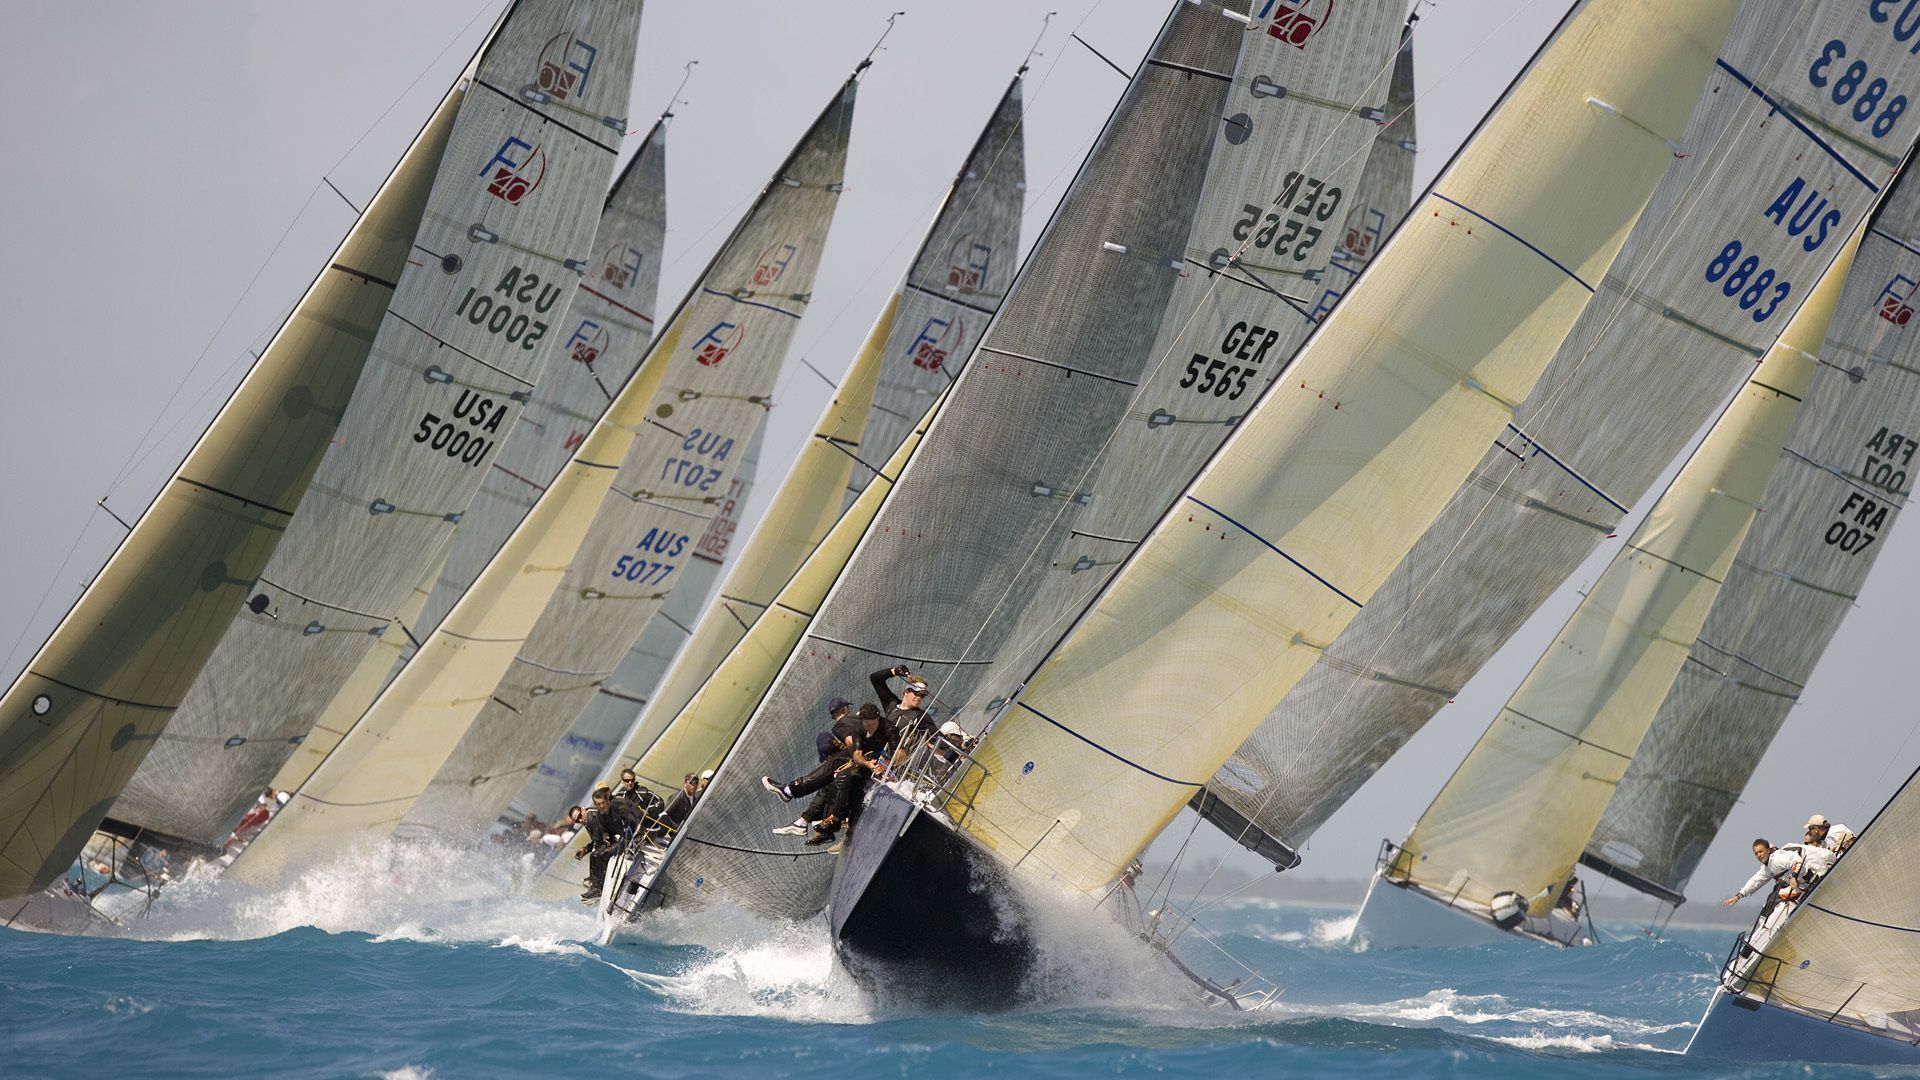 Regatta sailing race racing boat wallpaper 1920x1080 128417